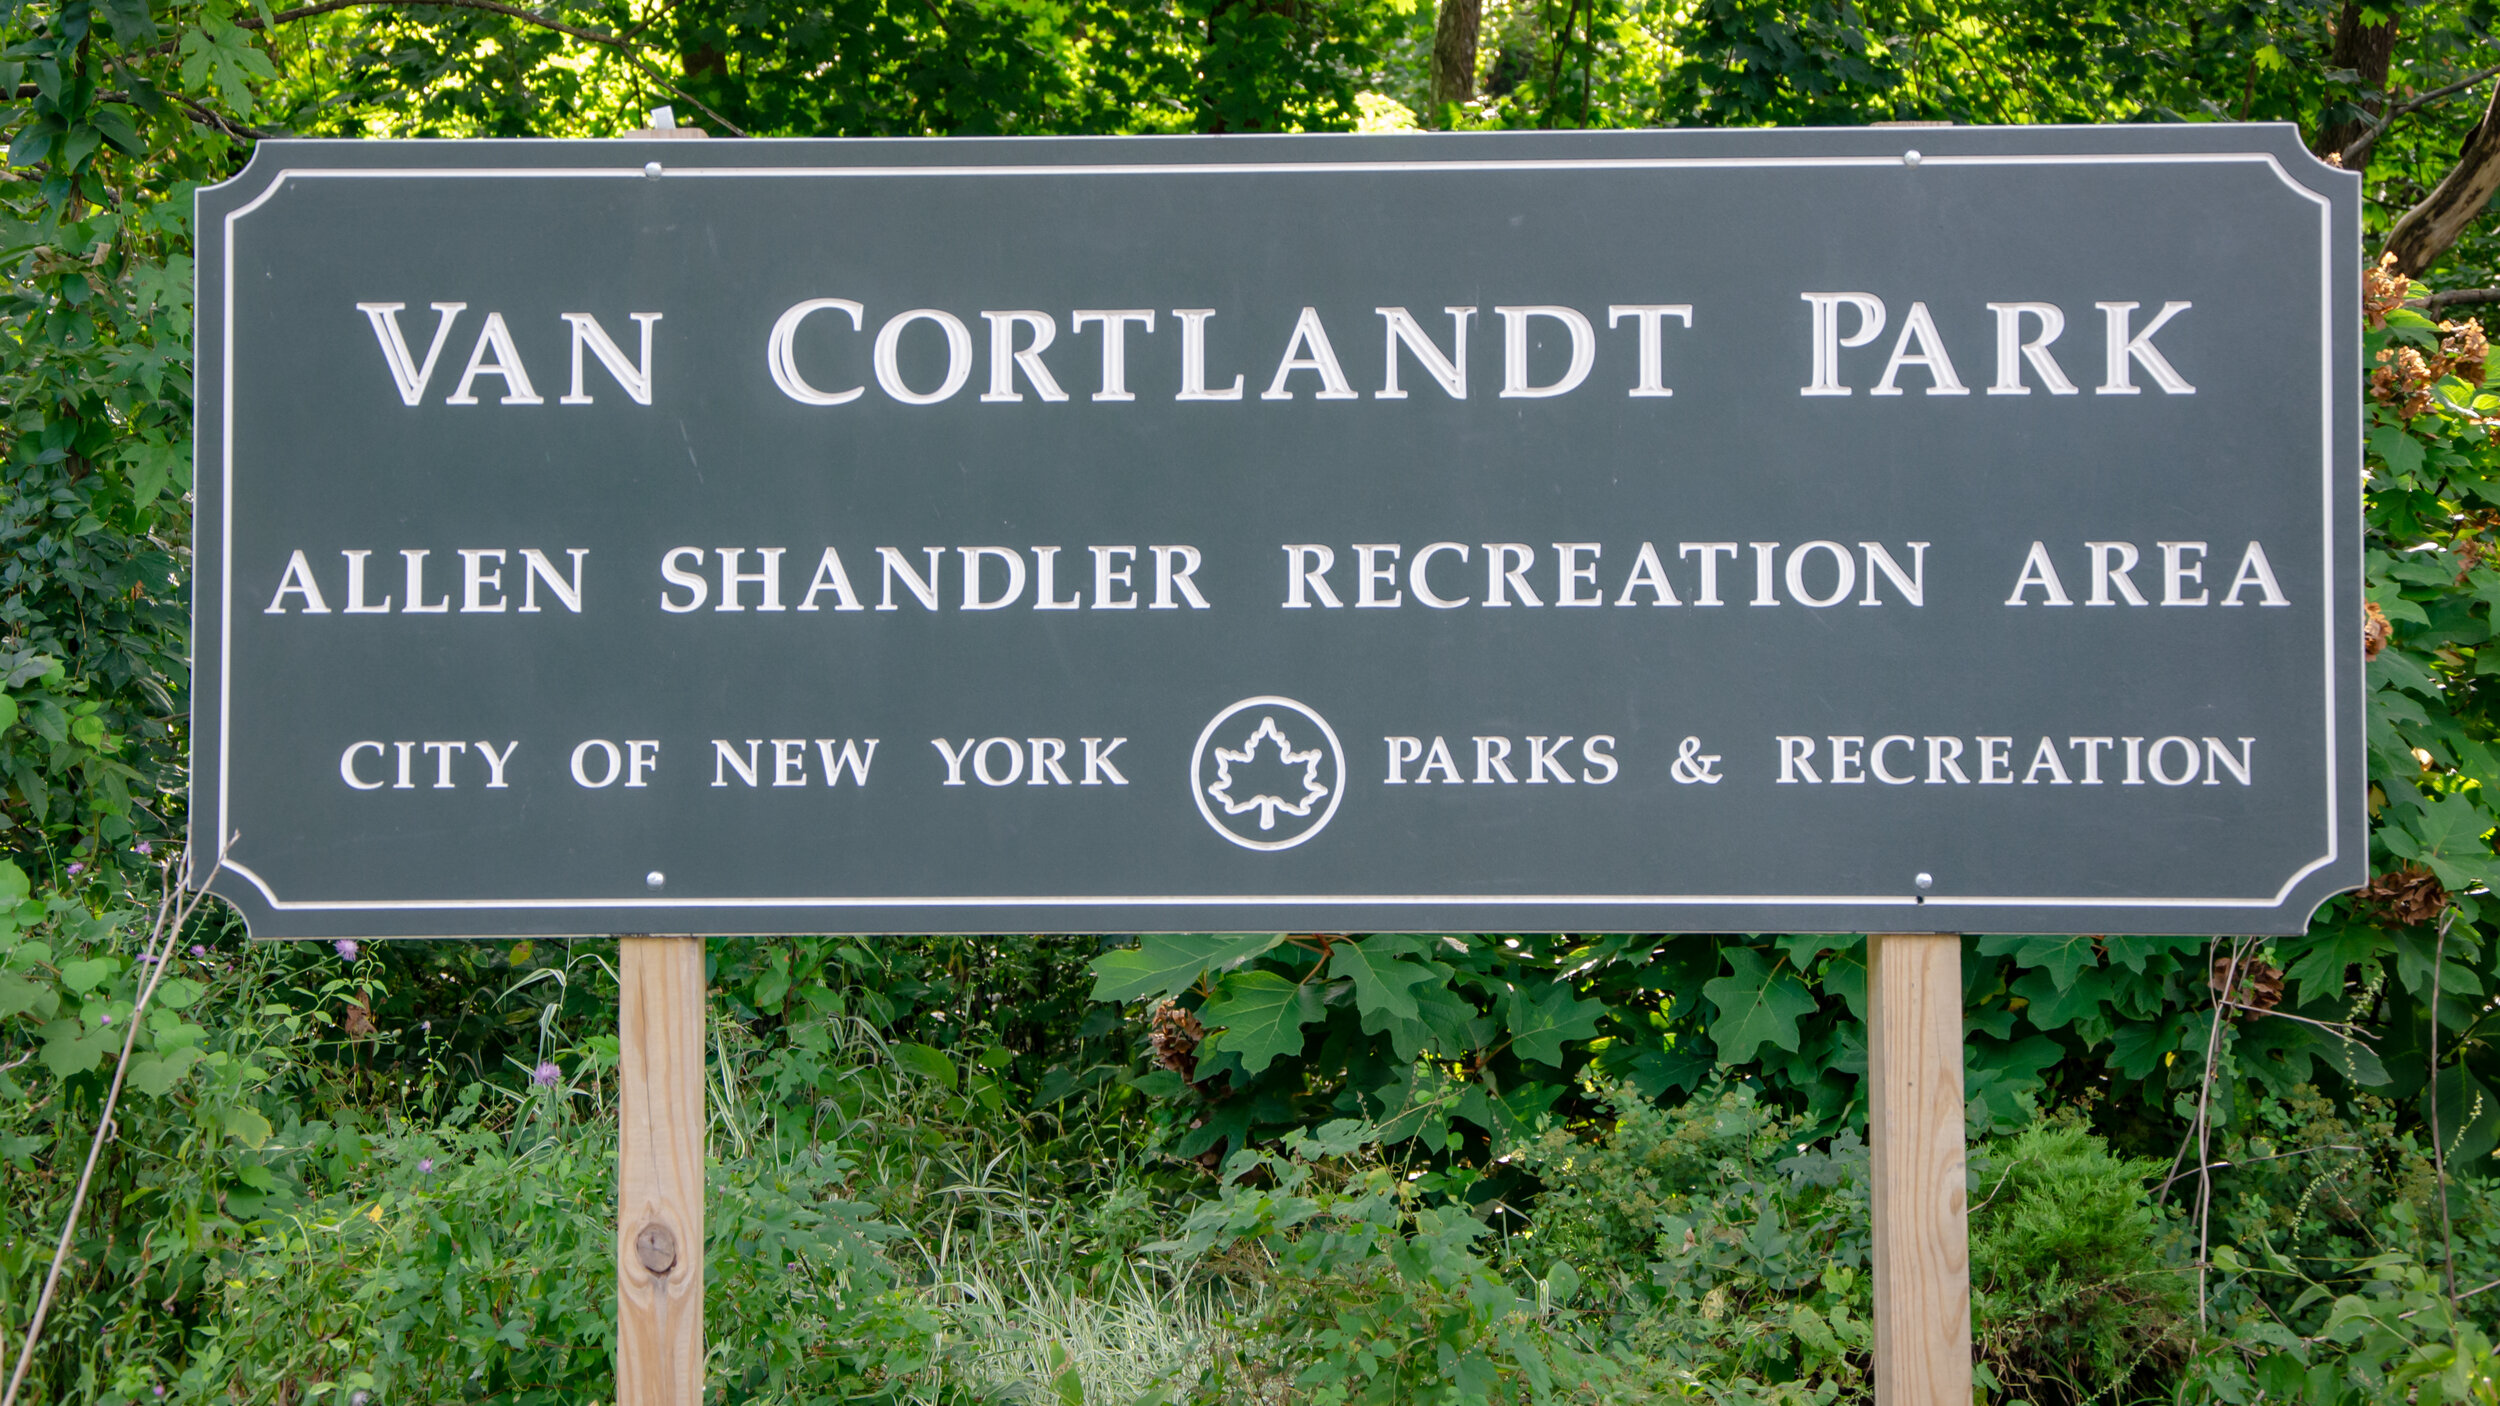 VC park sign & Adam Shandler Rec Area v2.jpg